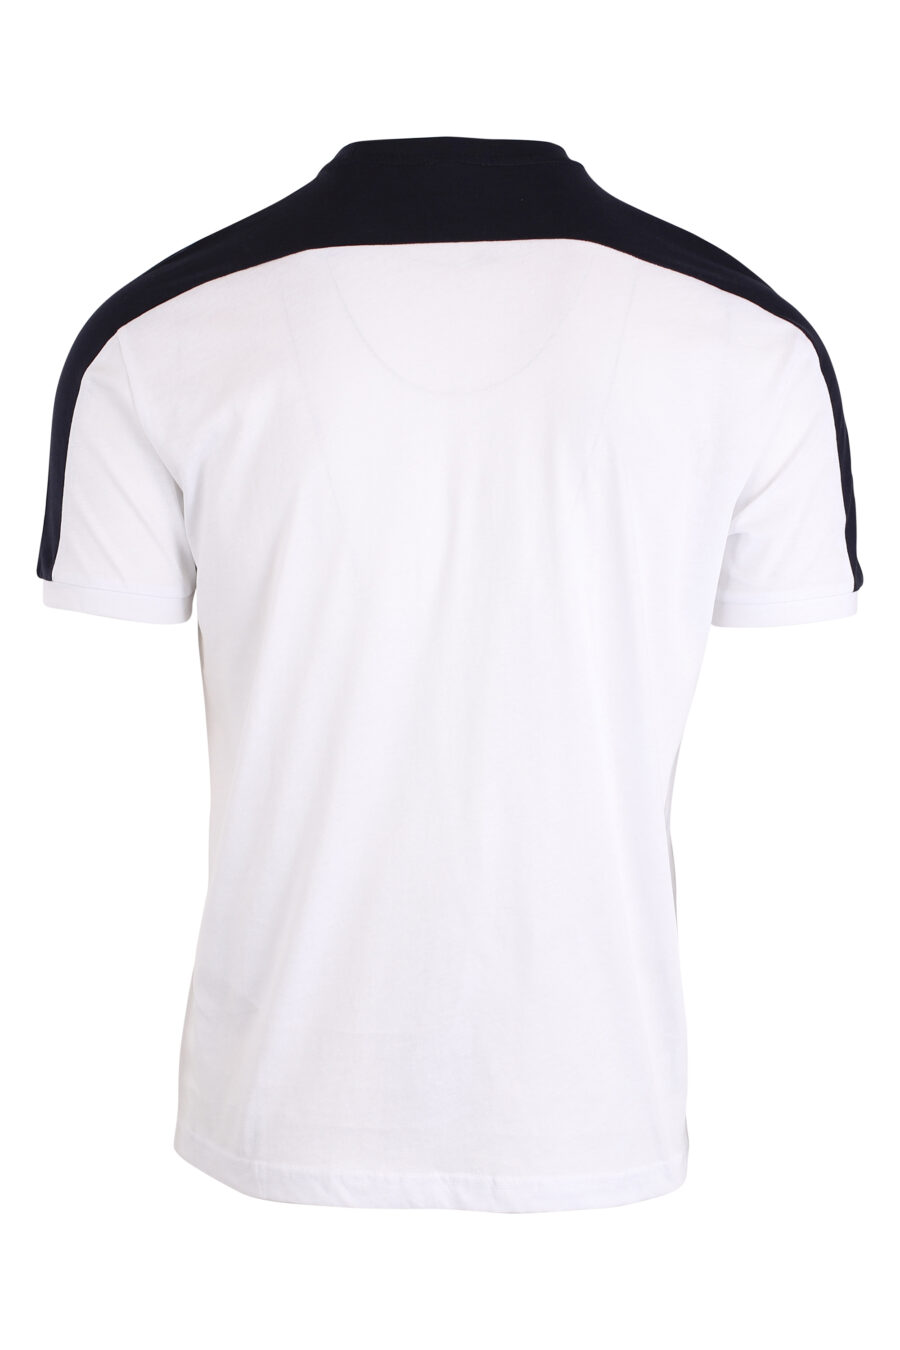 Camiseta blanca bicolor y maxilogo "lux identity" - IMG 4199